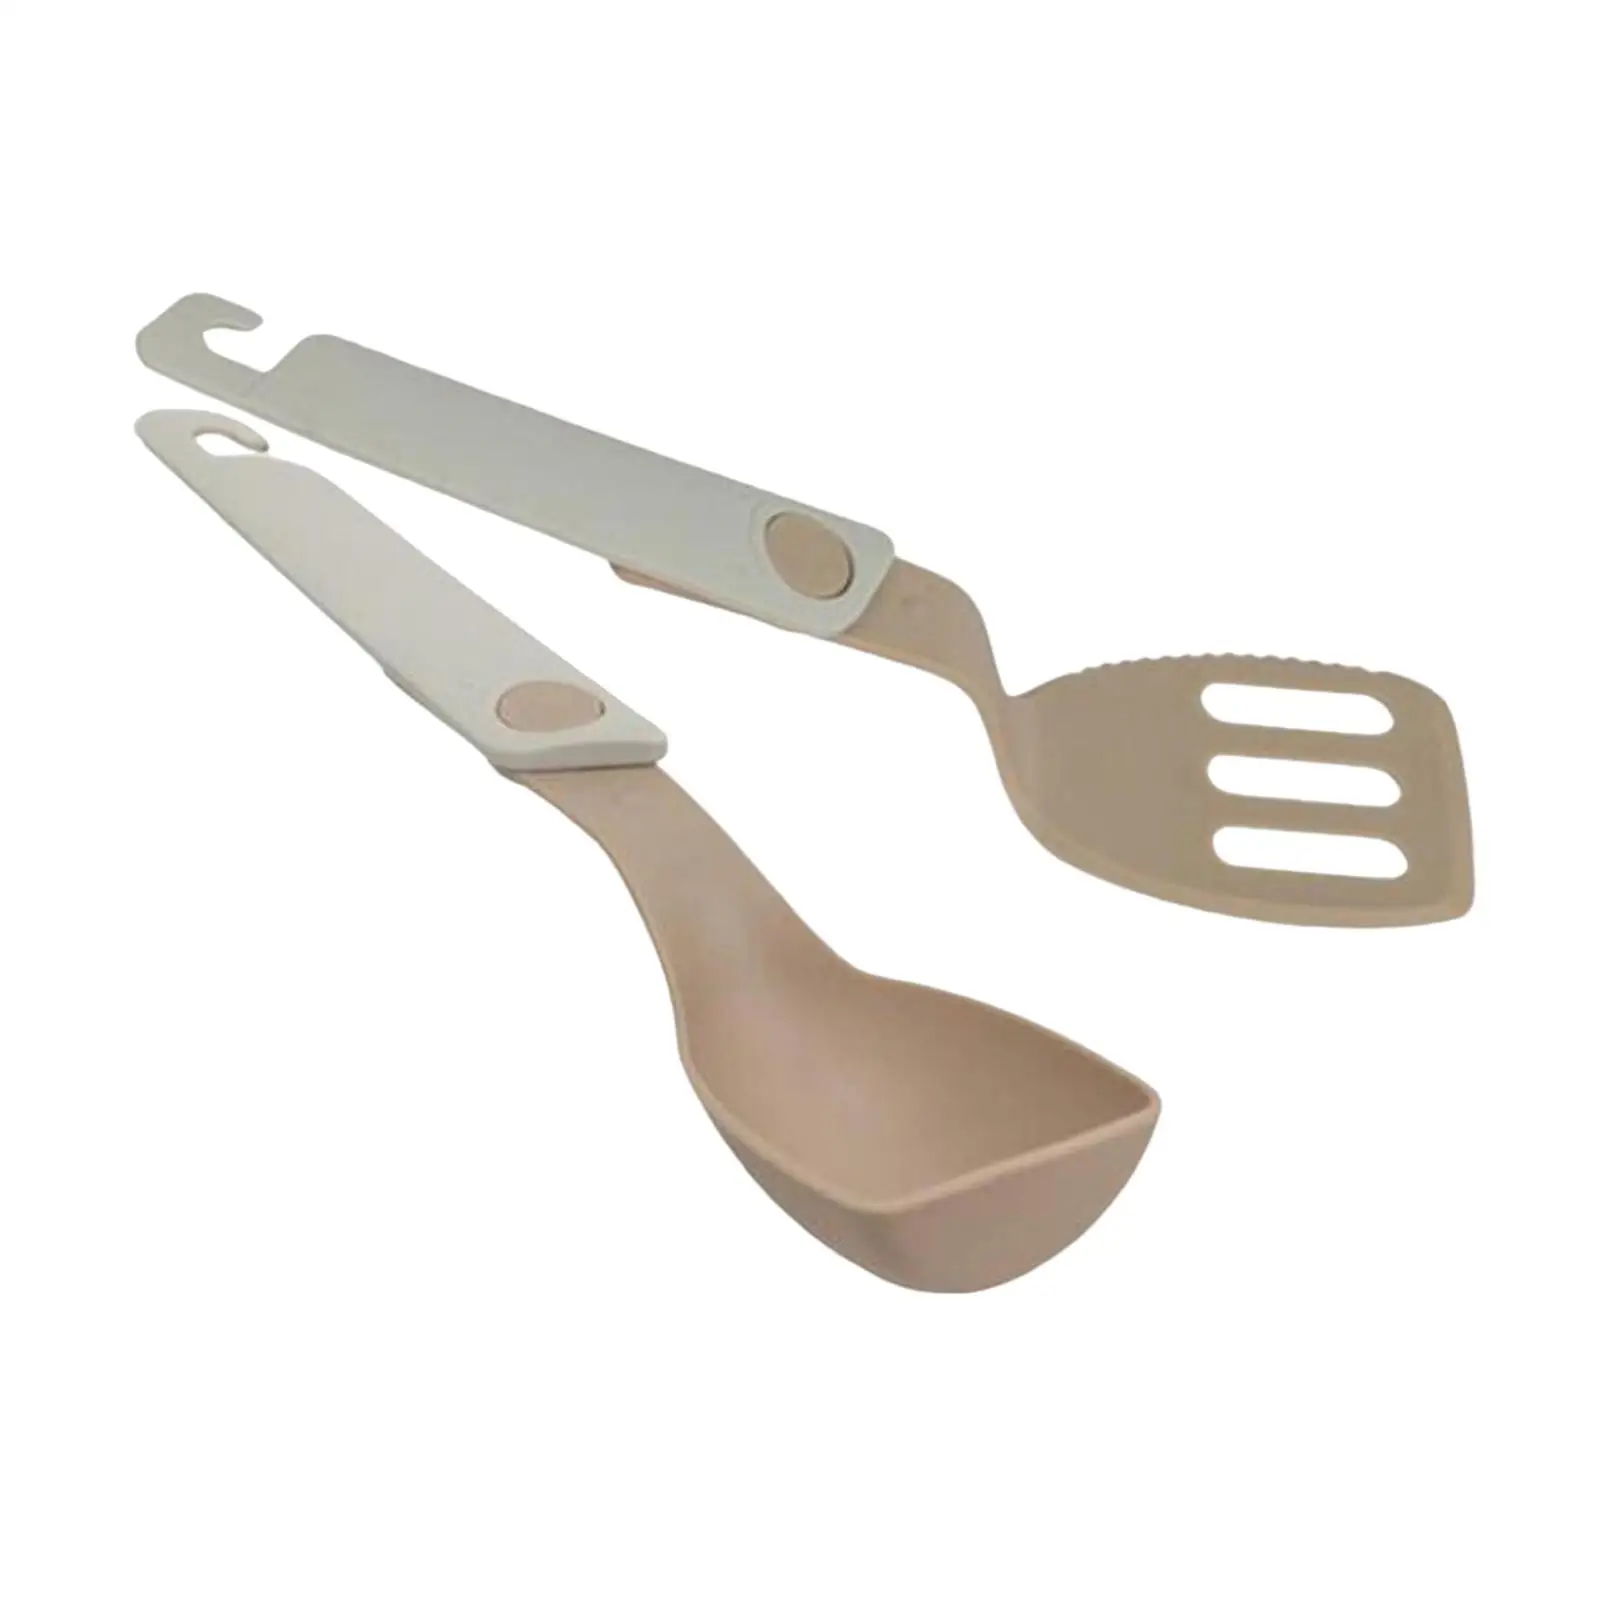 2x Camping Cooking Spoon Shovel Kitchen Utensils Folding Tableware Picnic